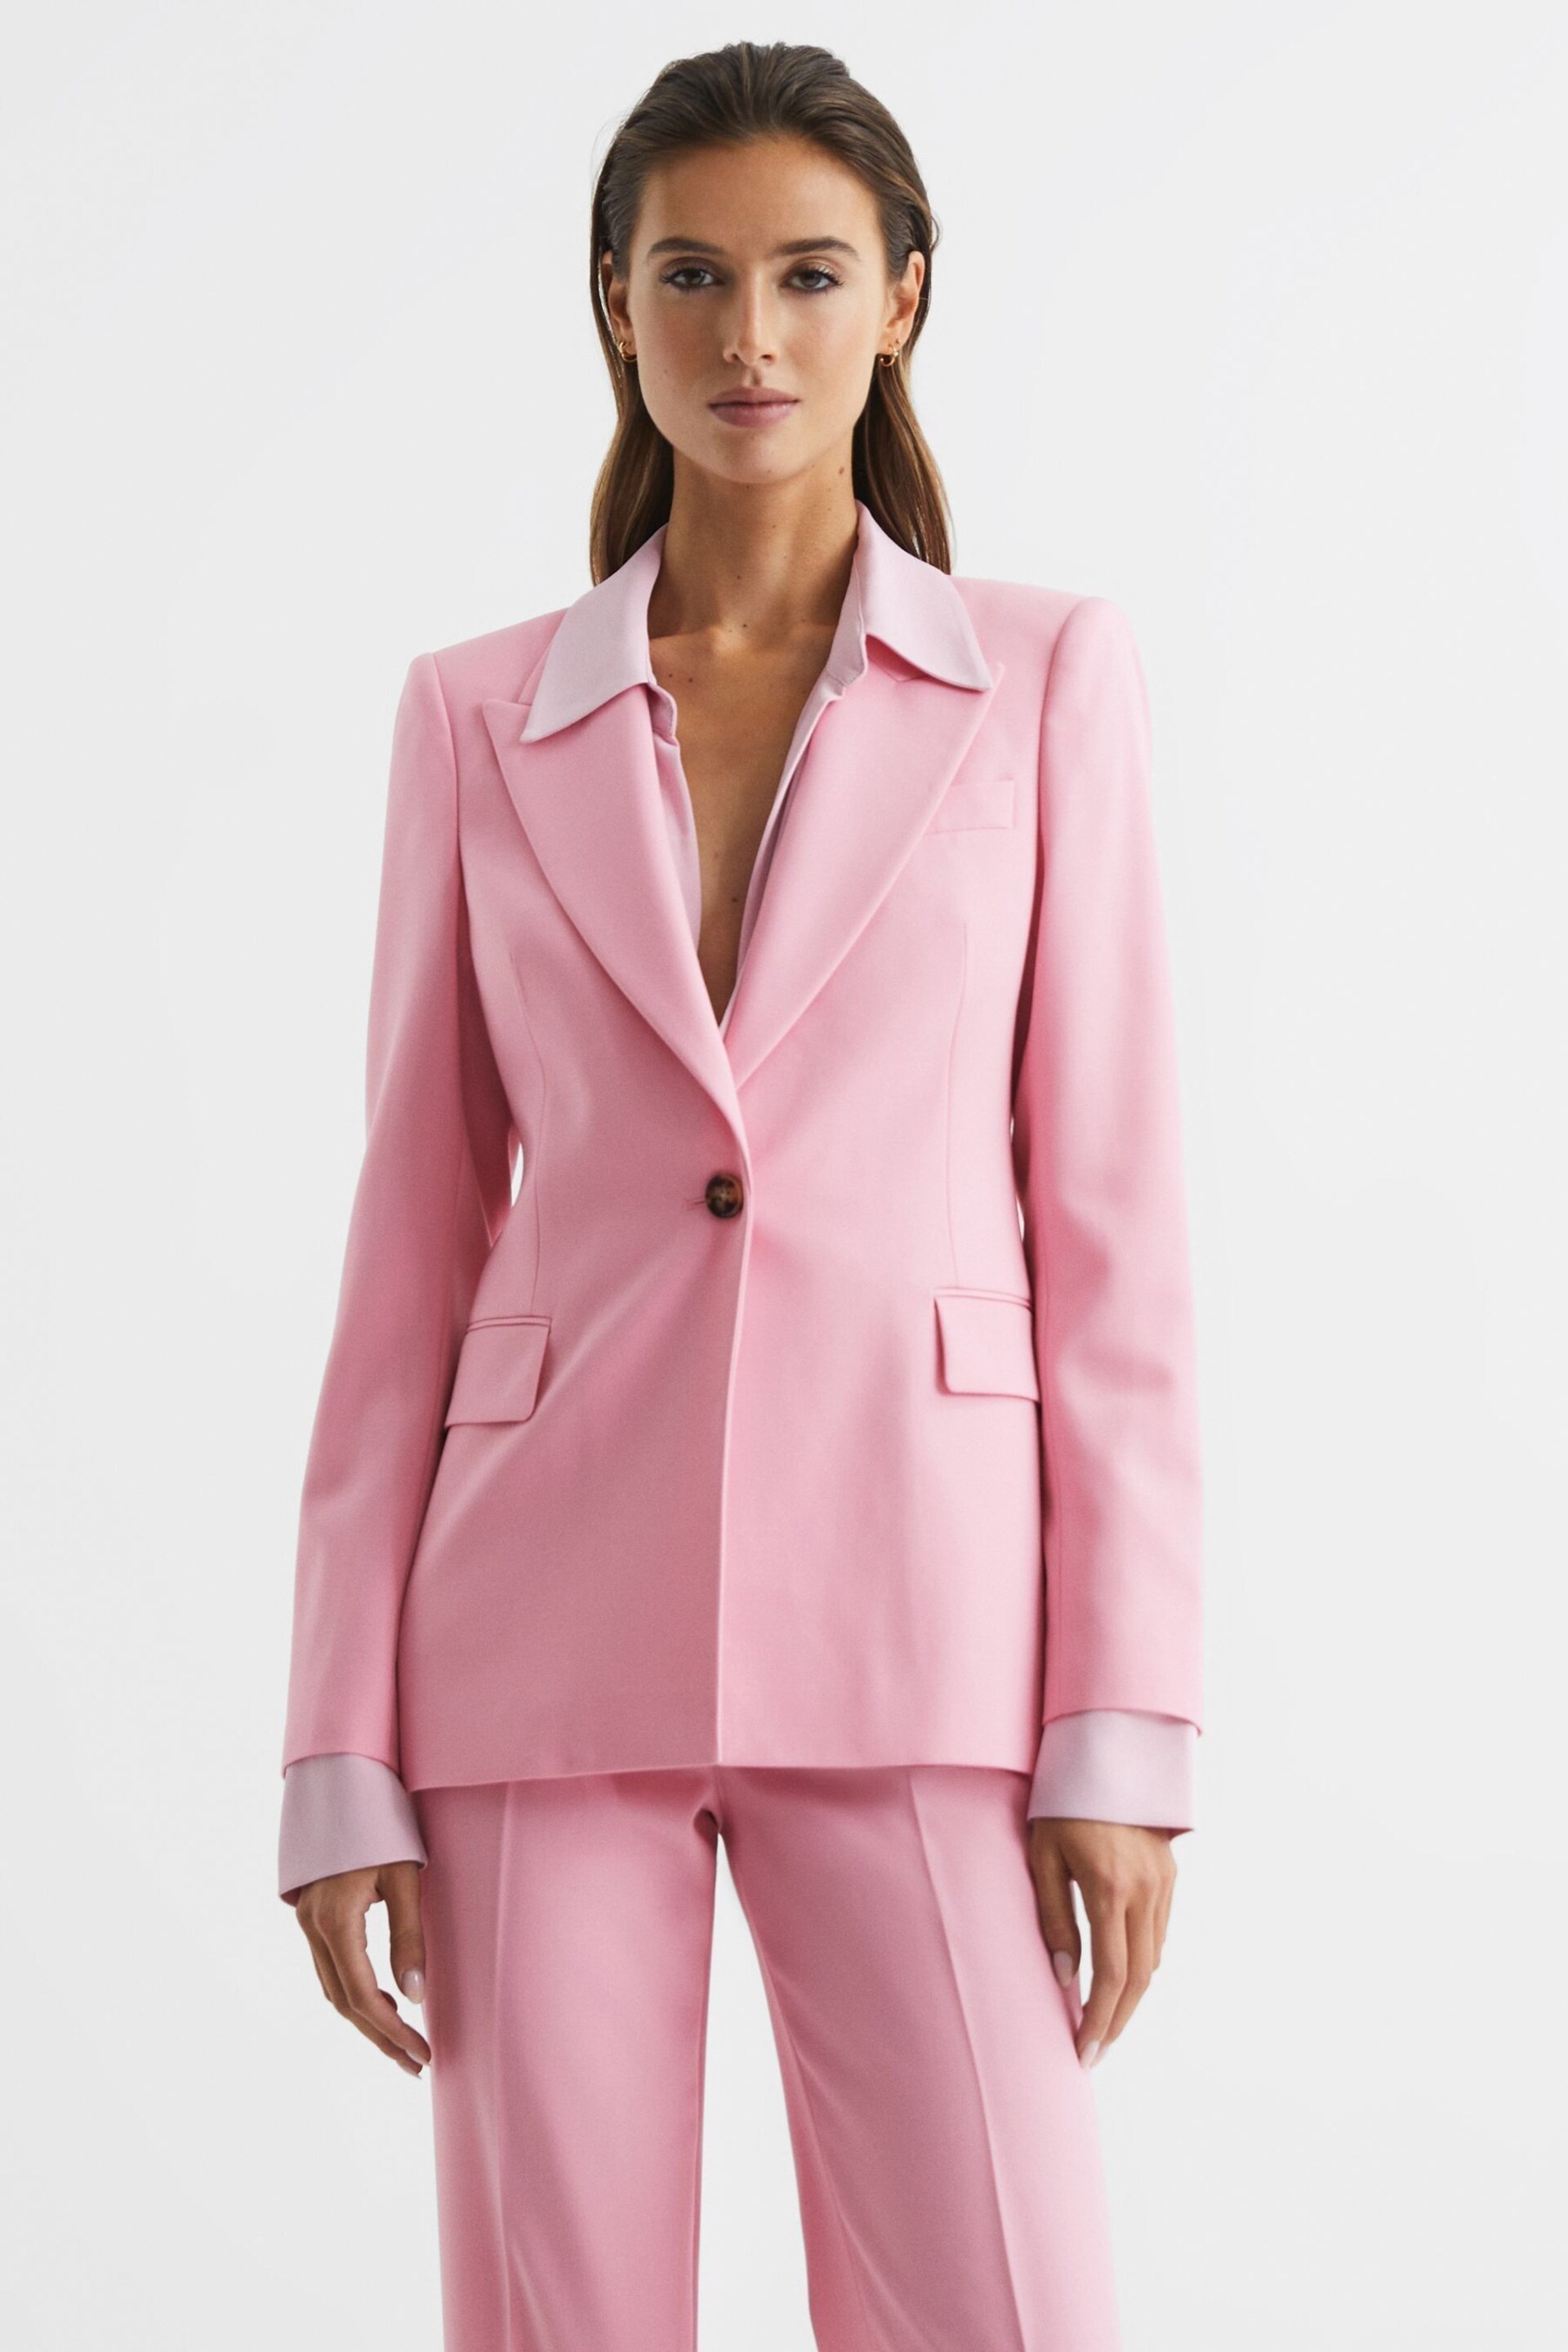 Reiss Pink Blair Single Breasted Wool Blend Blazer - Image 1 of 7